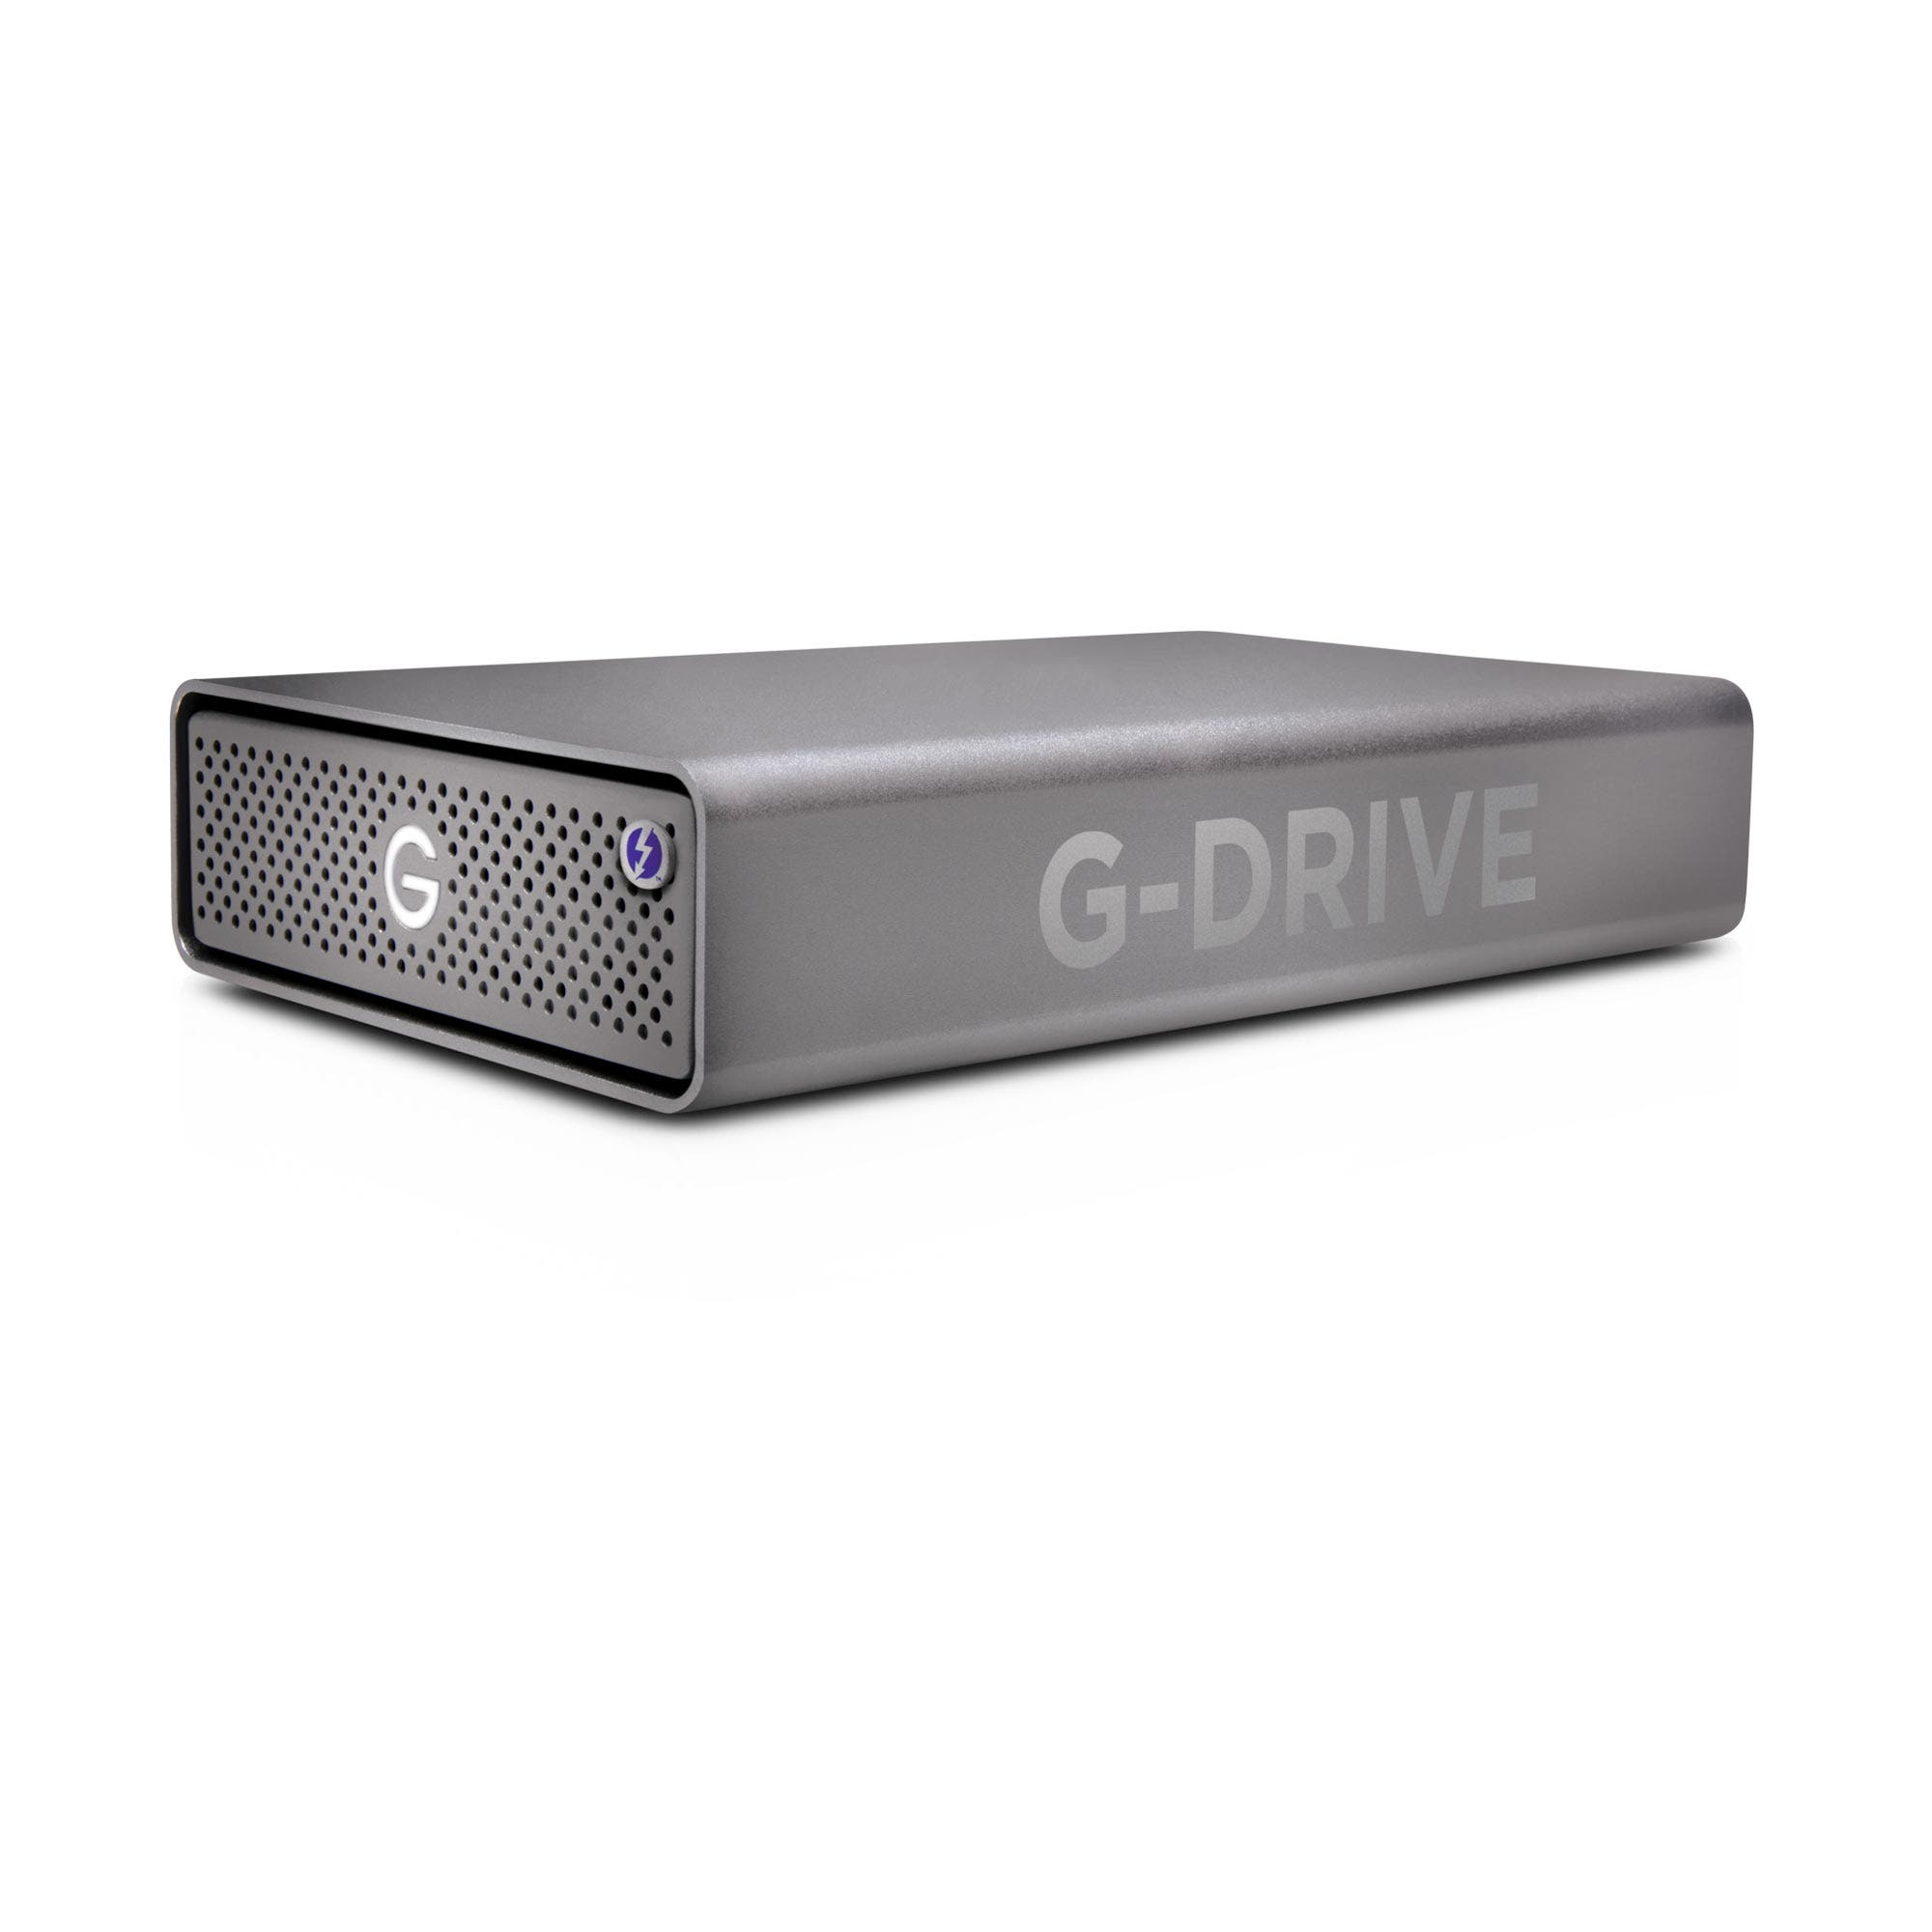 SanDisk Professional G-DRIVE™ PRO - Desktop Hard Drive 18TB